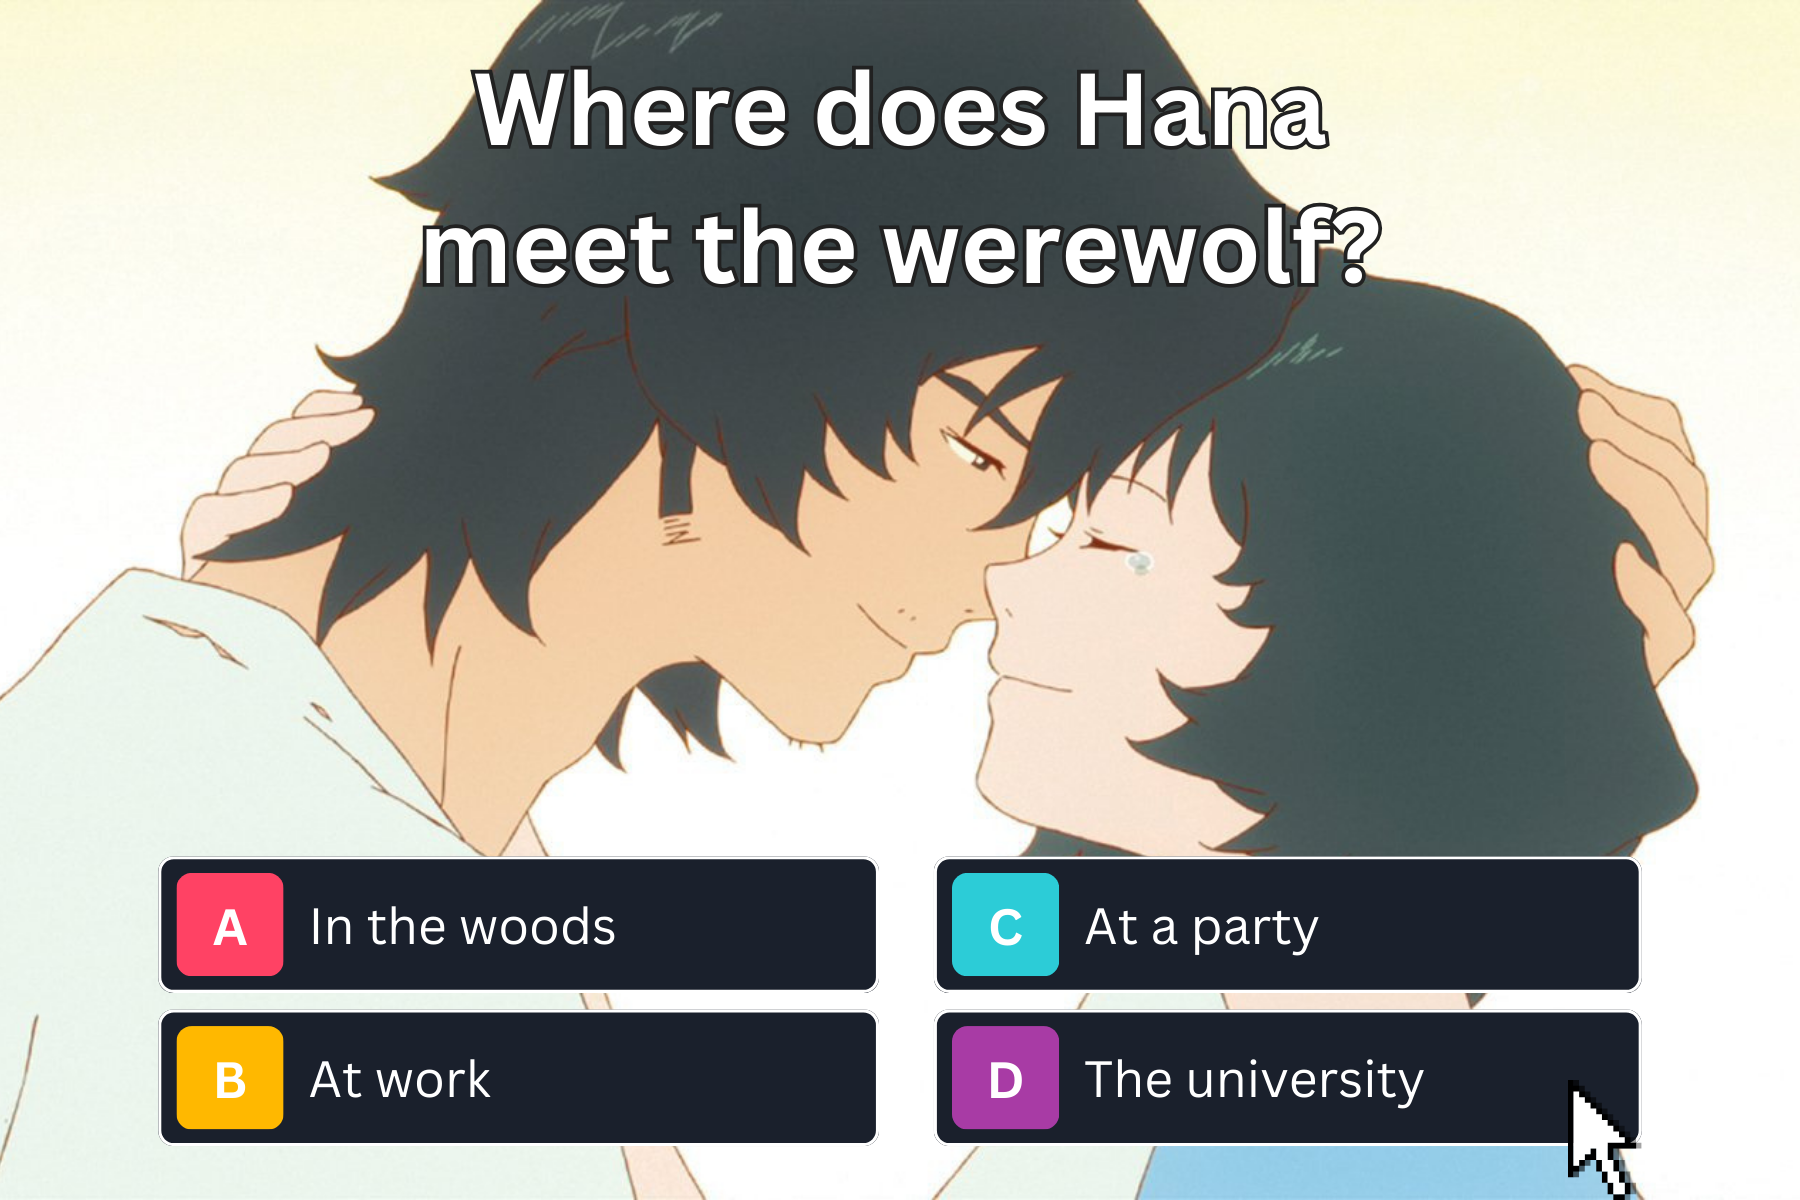 30 Question Anime Trivia Quiz: The Guild's Entrance Quiz - TriviaCreator